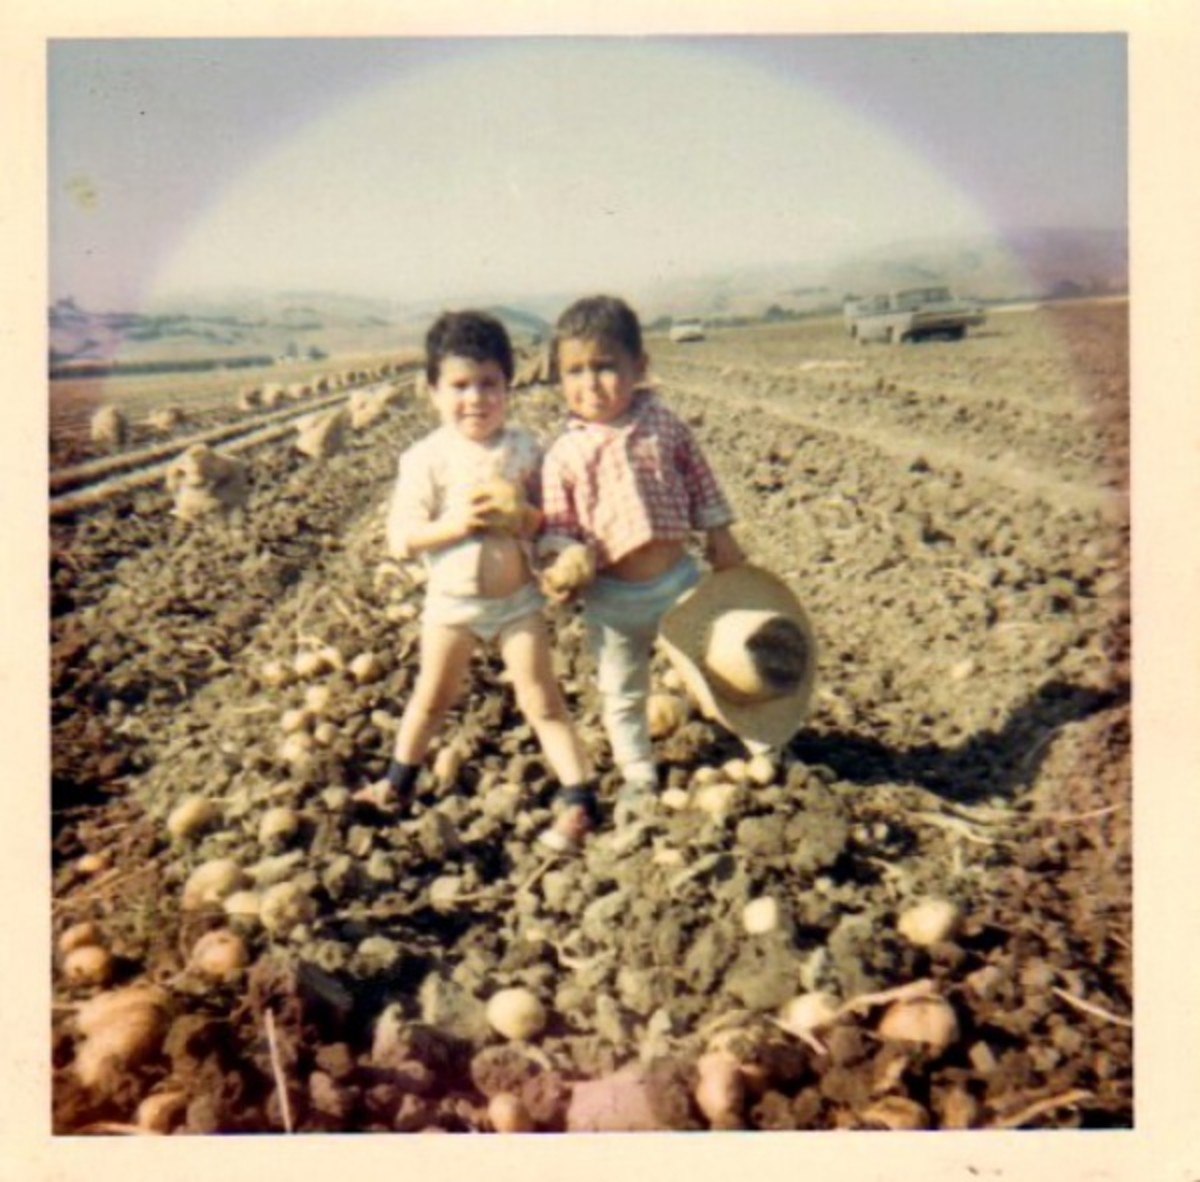 Jaime Cortez and his sister Erma, in San Juan Bautista, CA. in 1968. Photo courtesy of Jaime Cortez